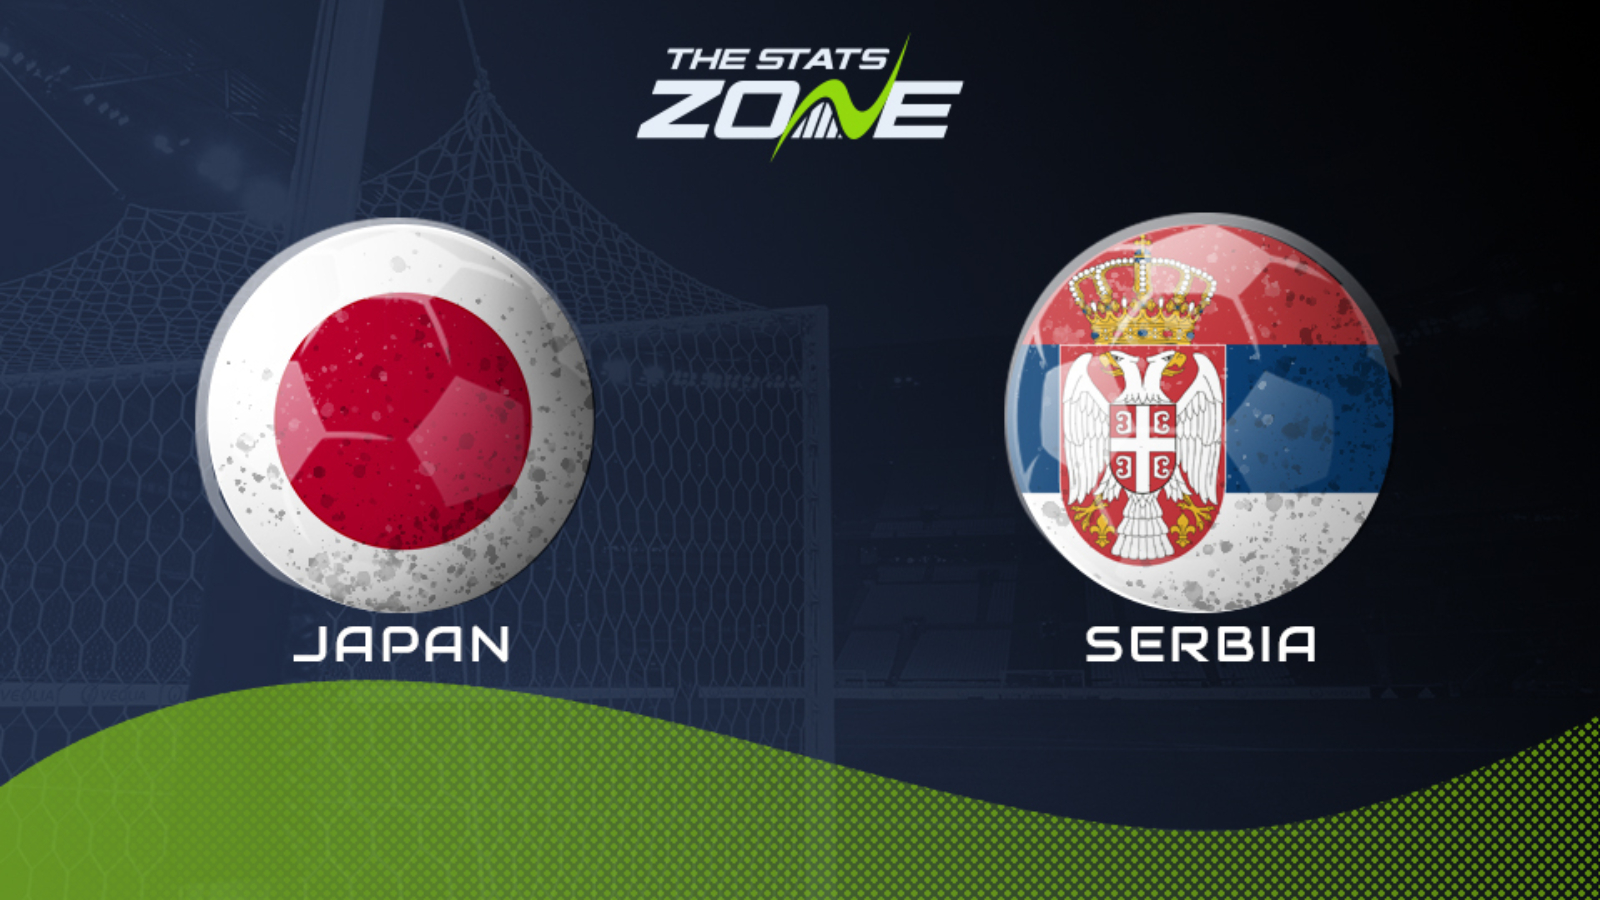 Japan vs serbia